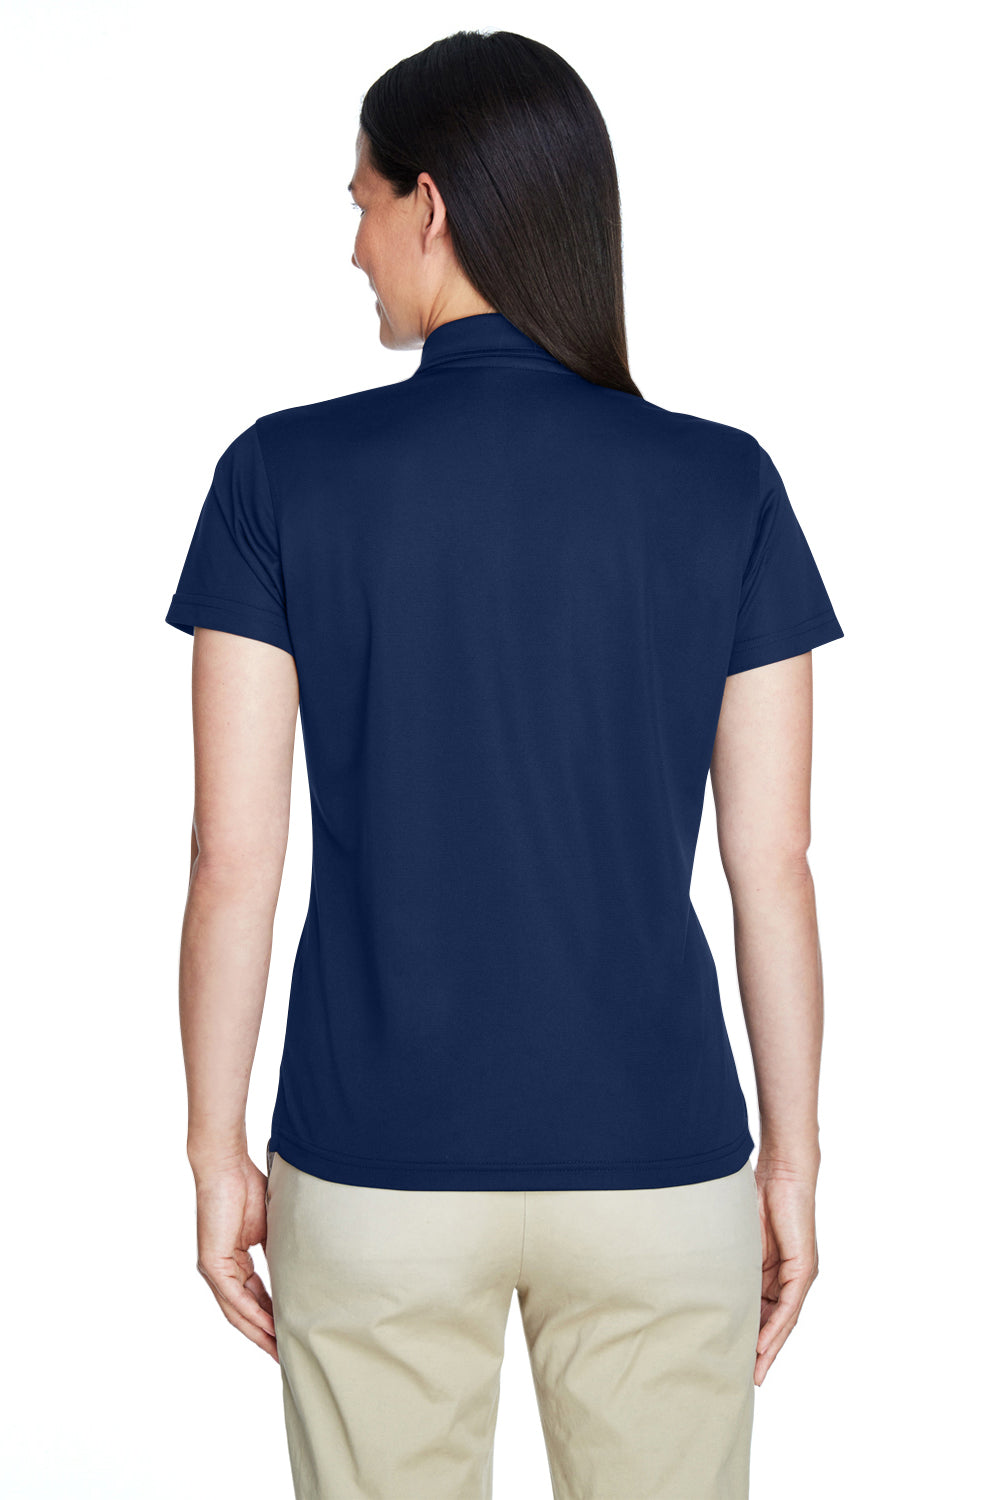 Team 365 TT21W Womens Command Performance Moisture Wicking Short Sleeve Polo Shirt Navy Blue Back